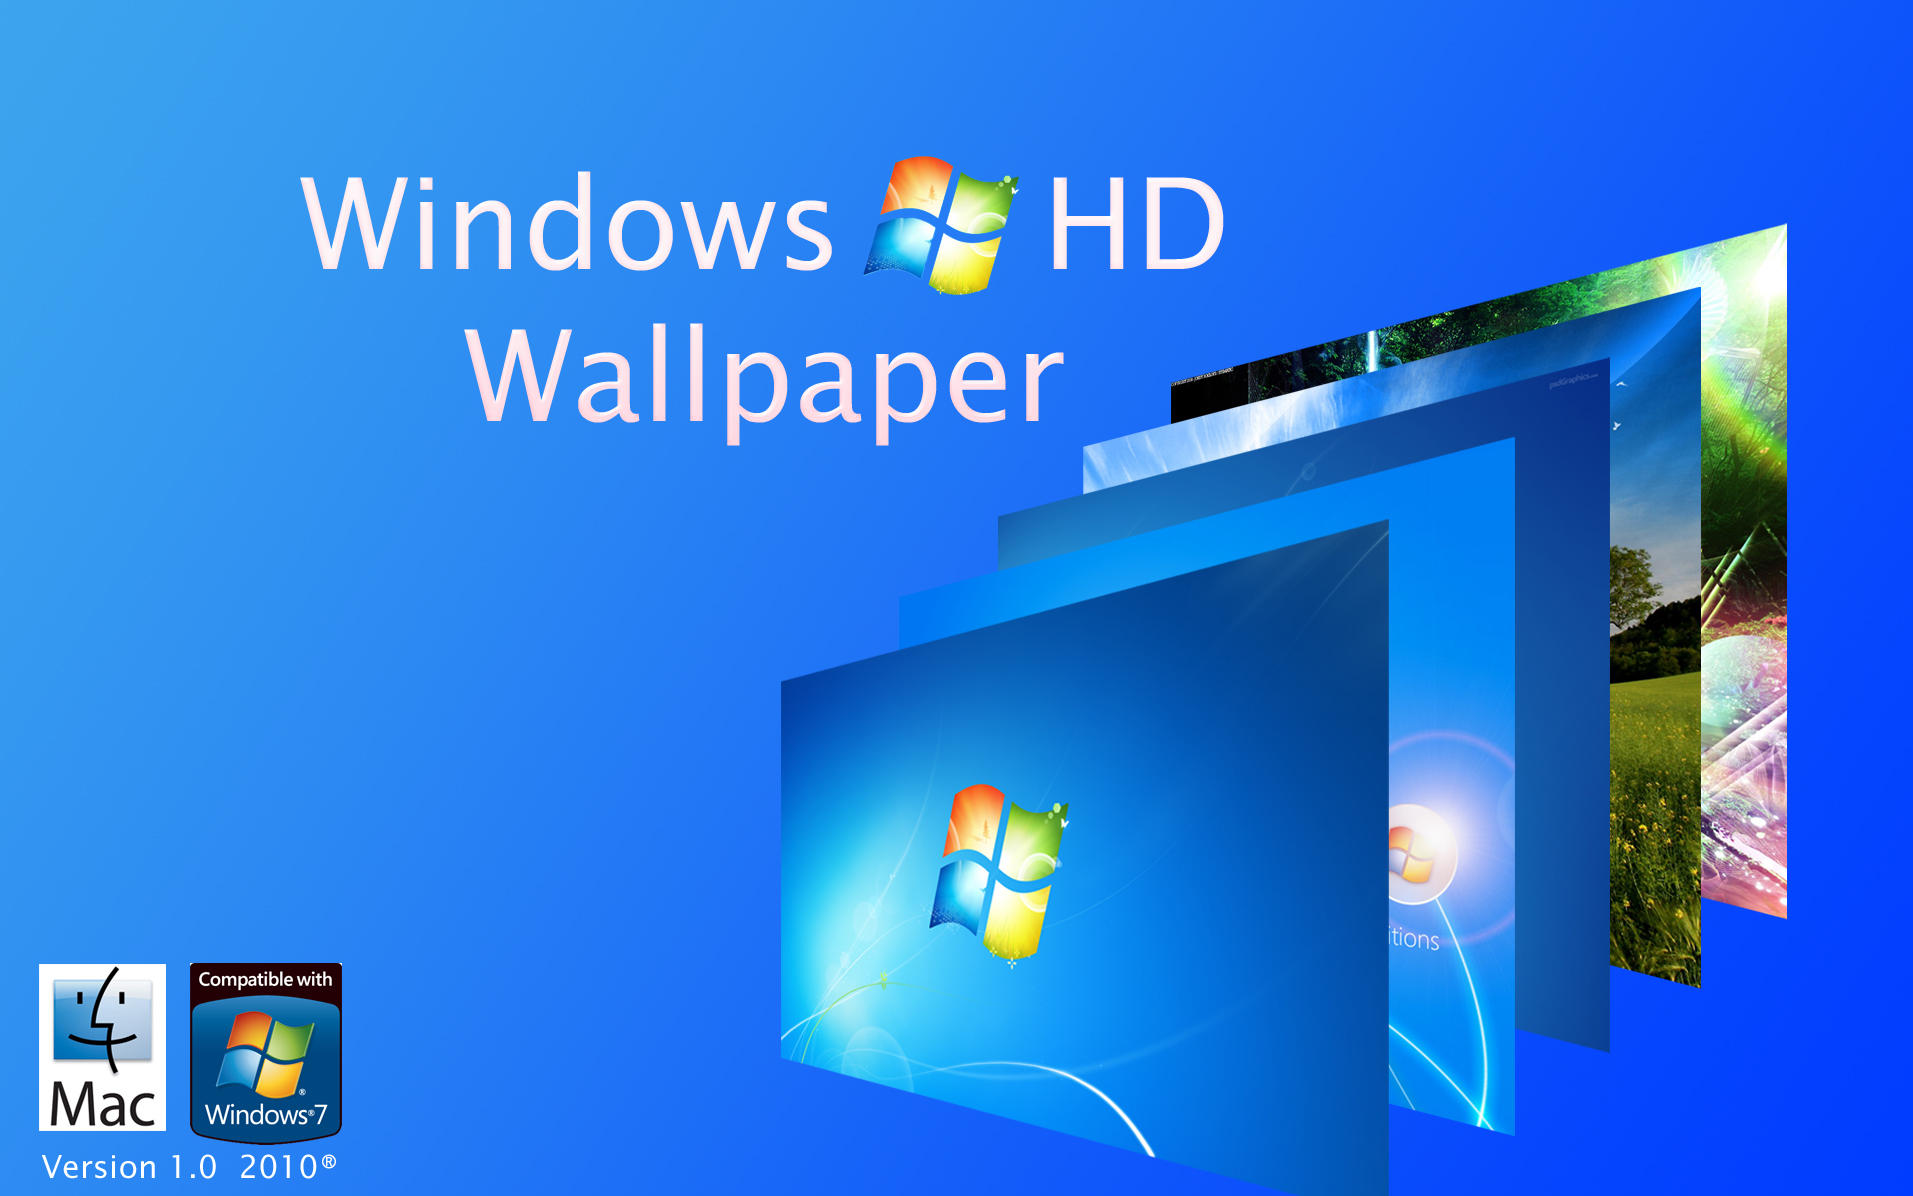 Windows 10 Wallpaper Pack